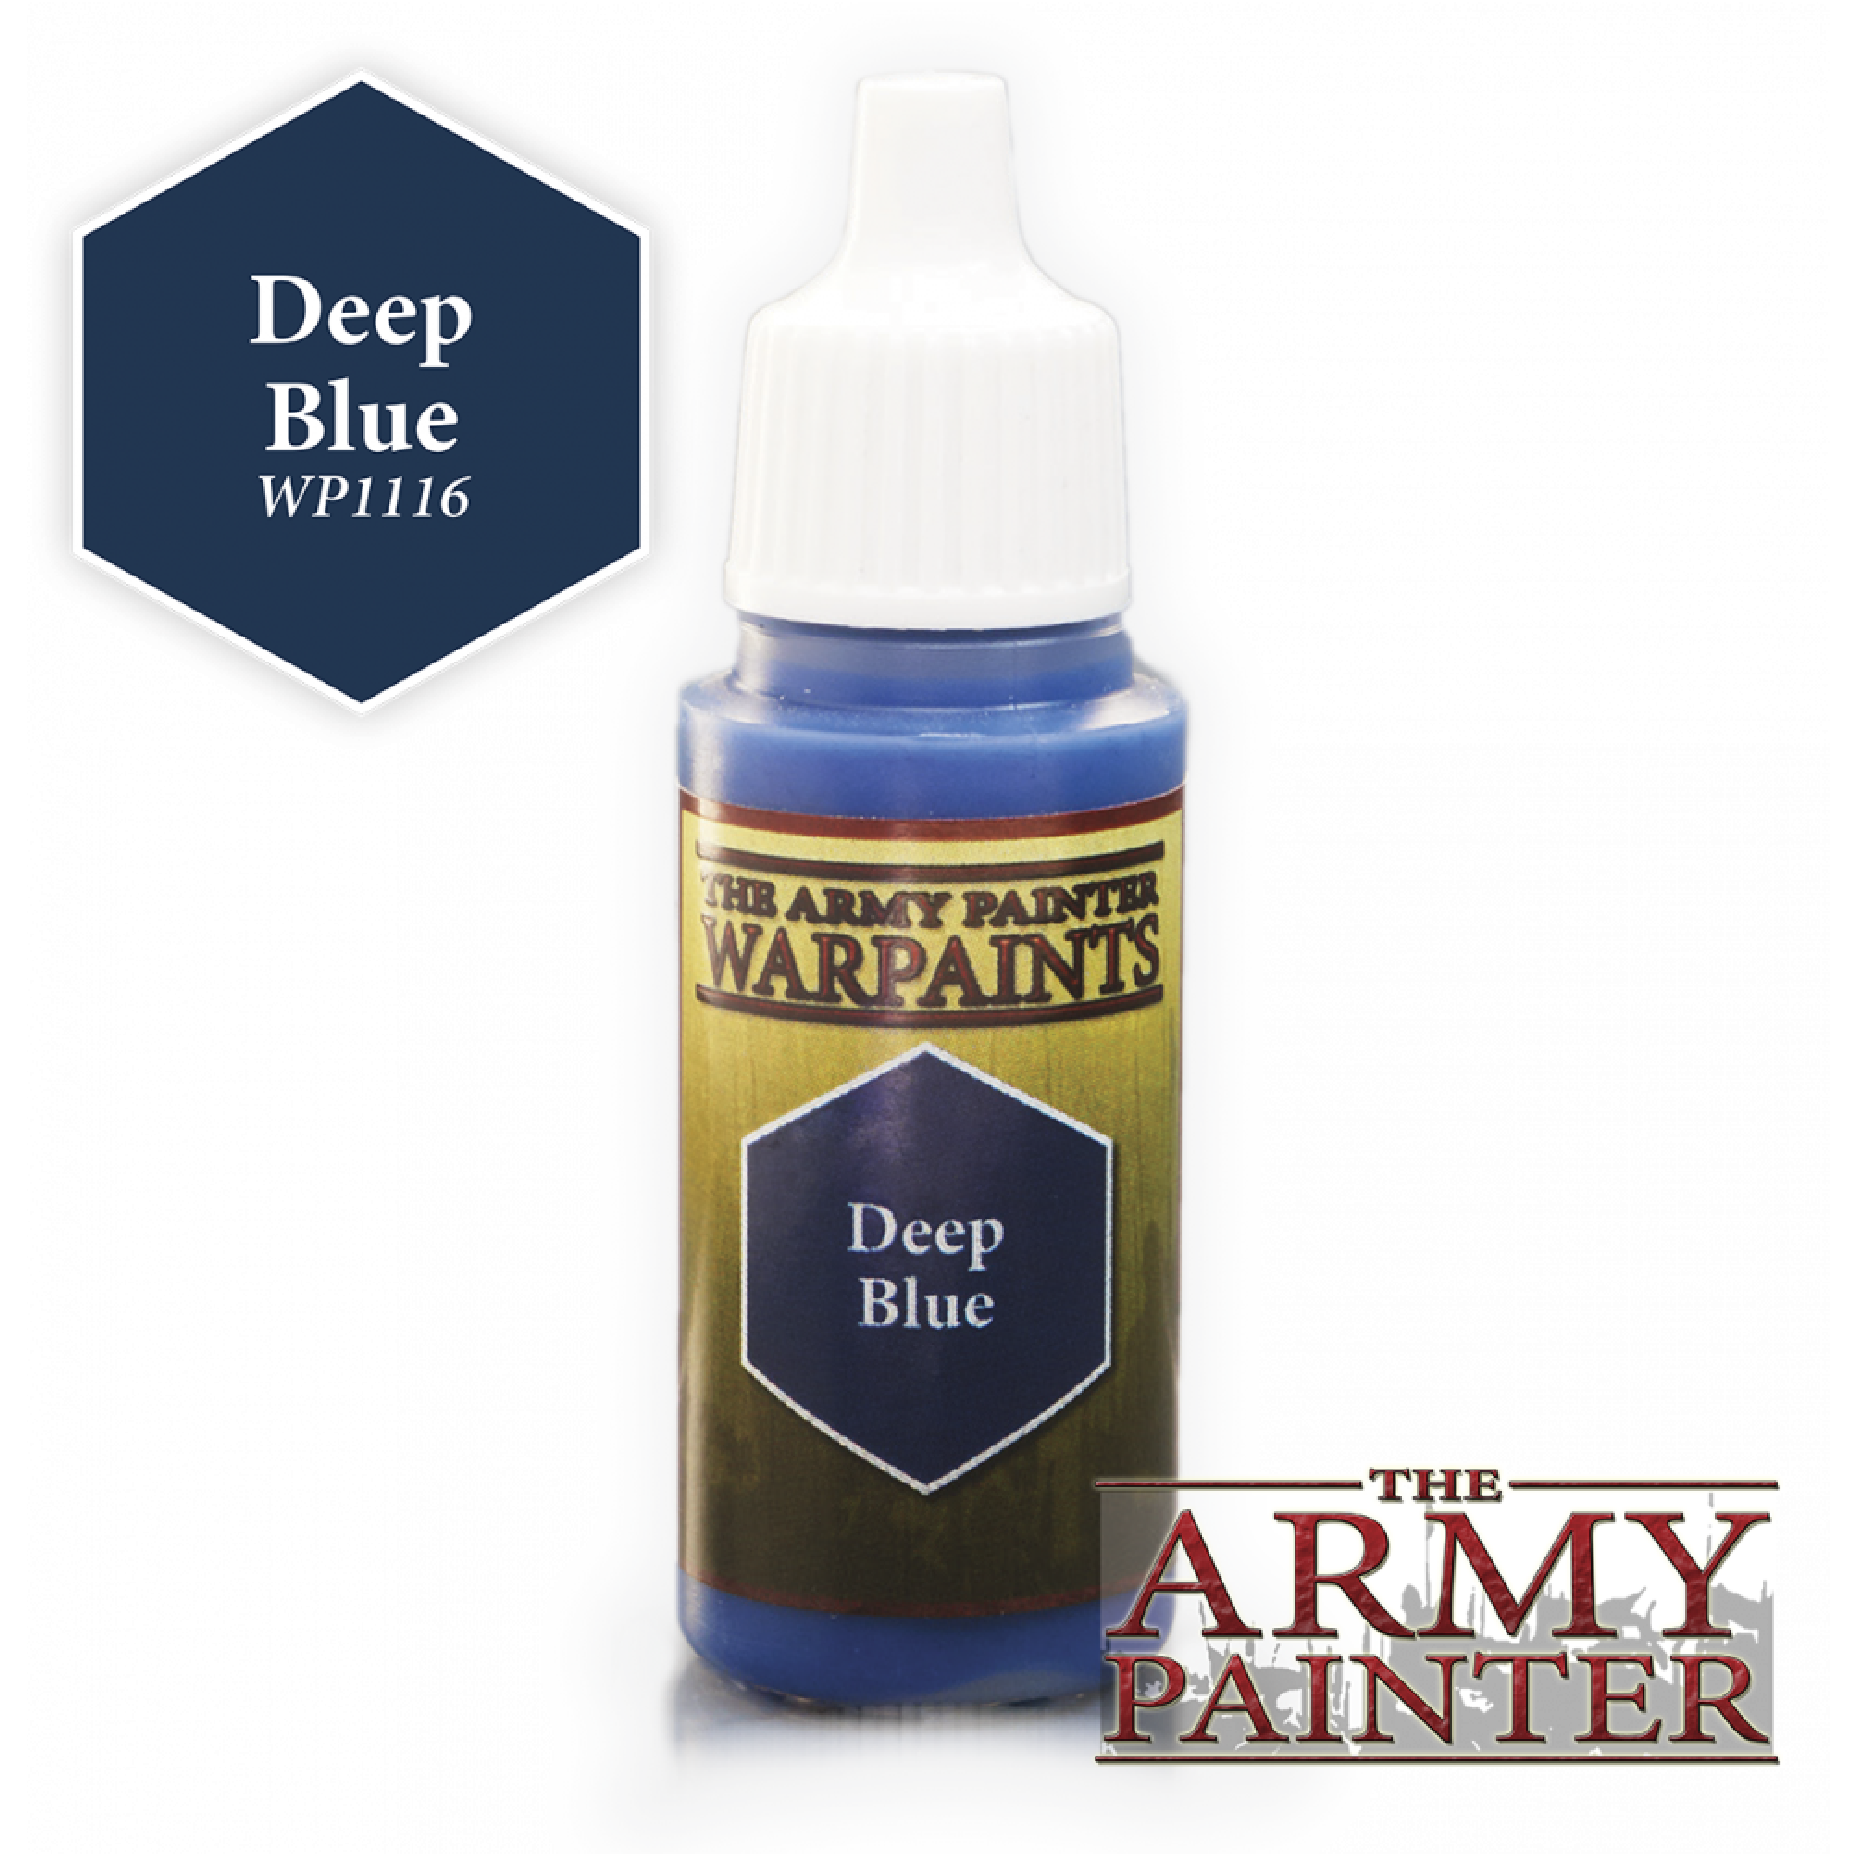 Army Painter Warpaint - Deep Blue